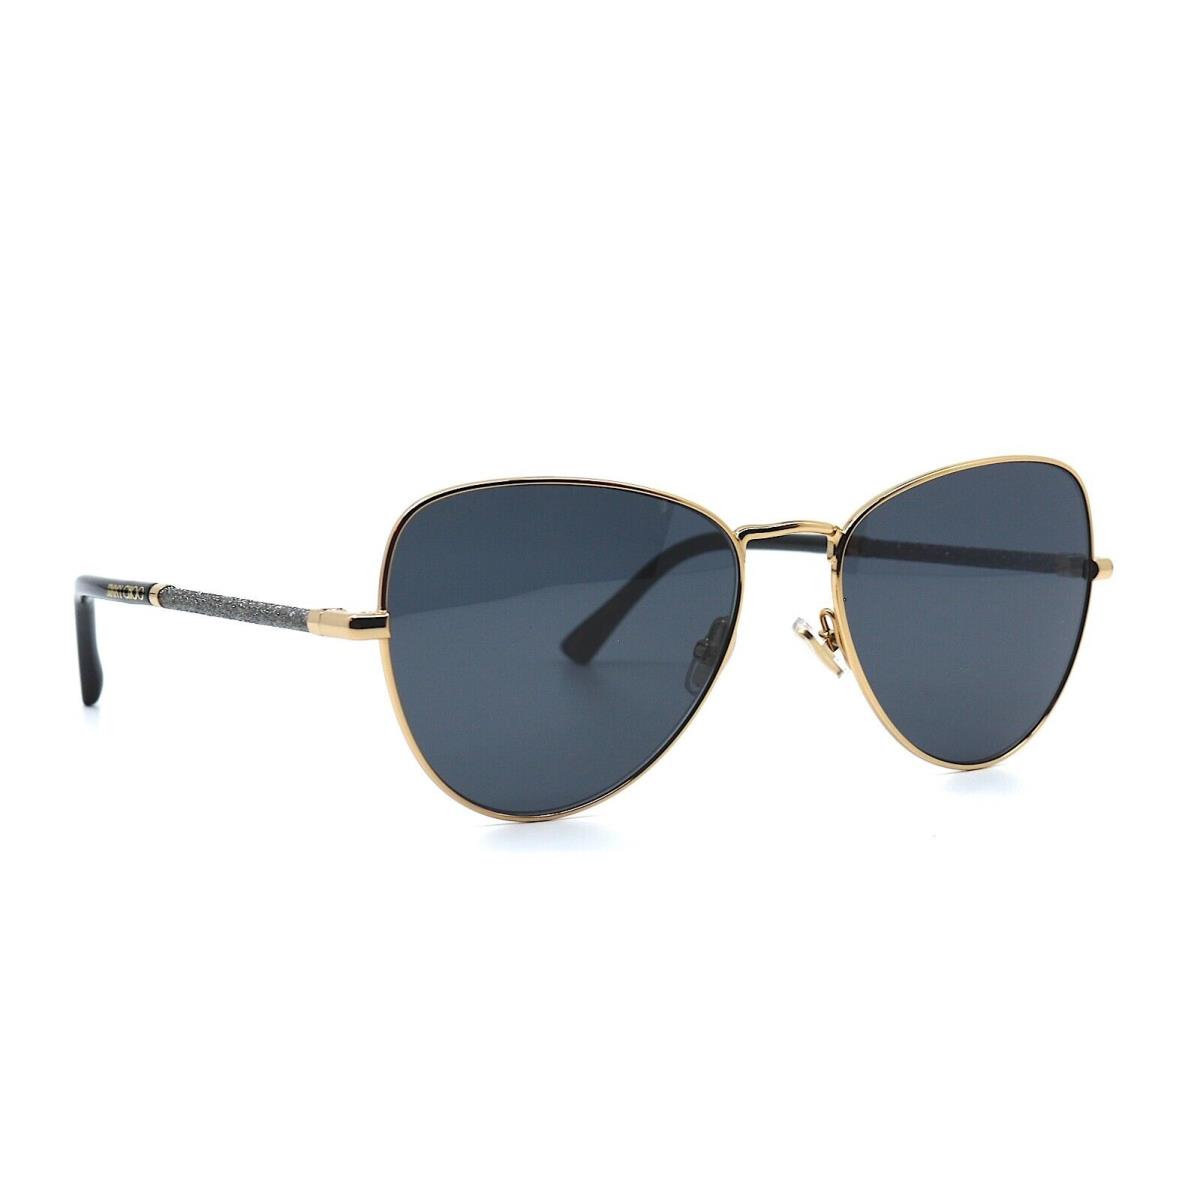 Jimmy Choo Carol/s 2M2 Cold/black Grey Sunglasses